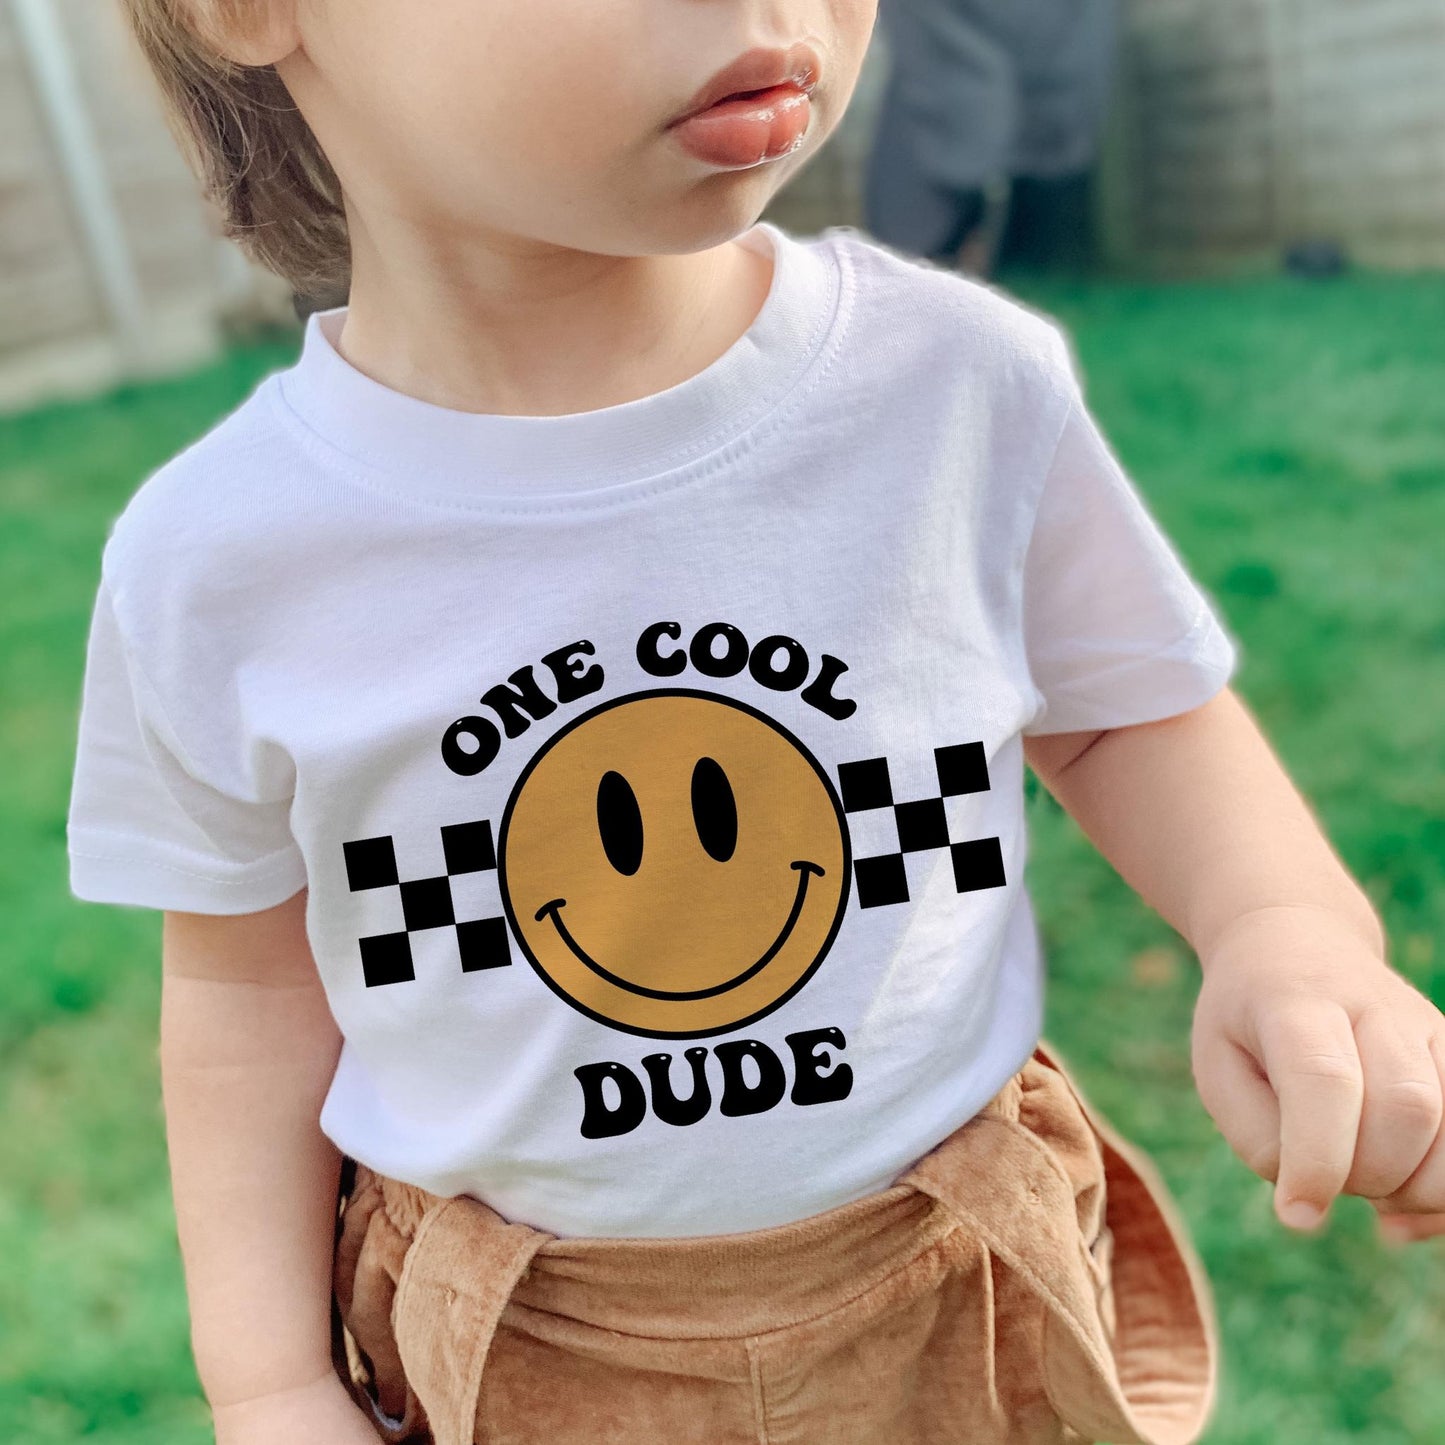 One Cool Dude Kids’ T-Shirt